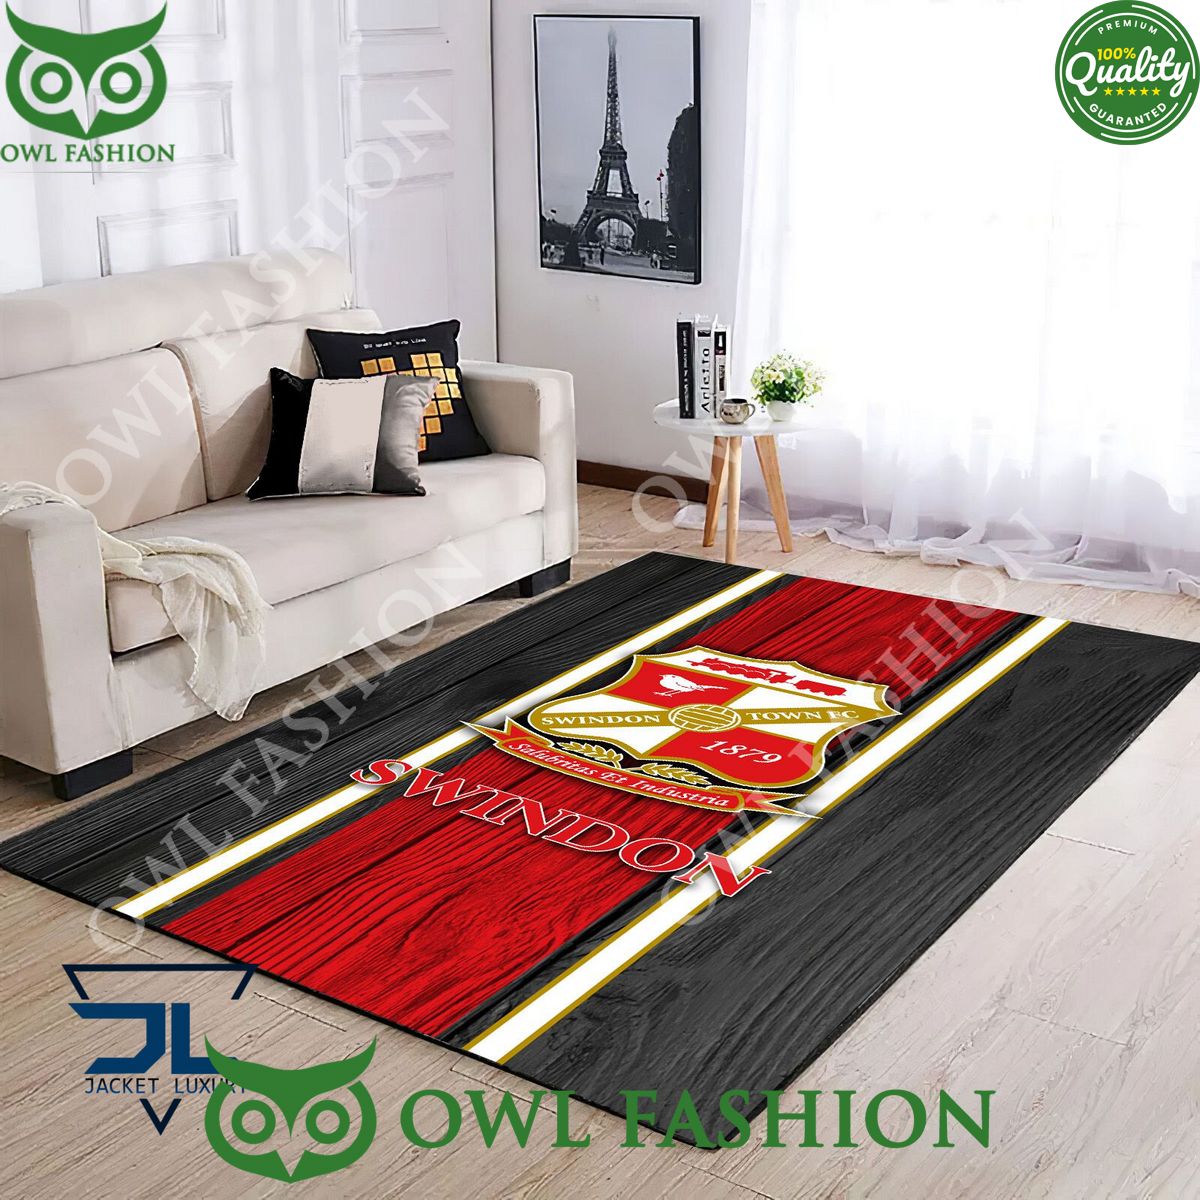 Swindon Town EFL Football Living room Rug Carpet Decor